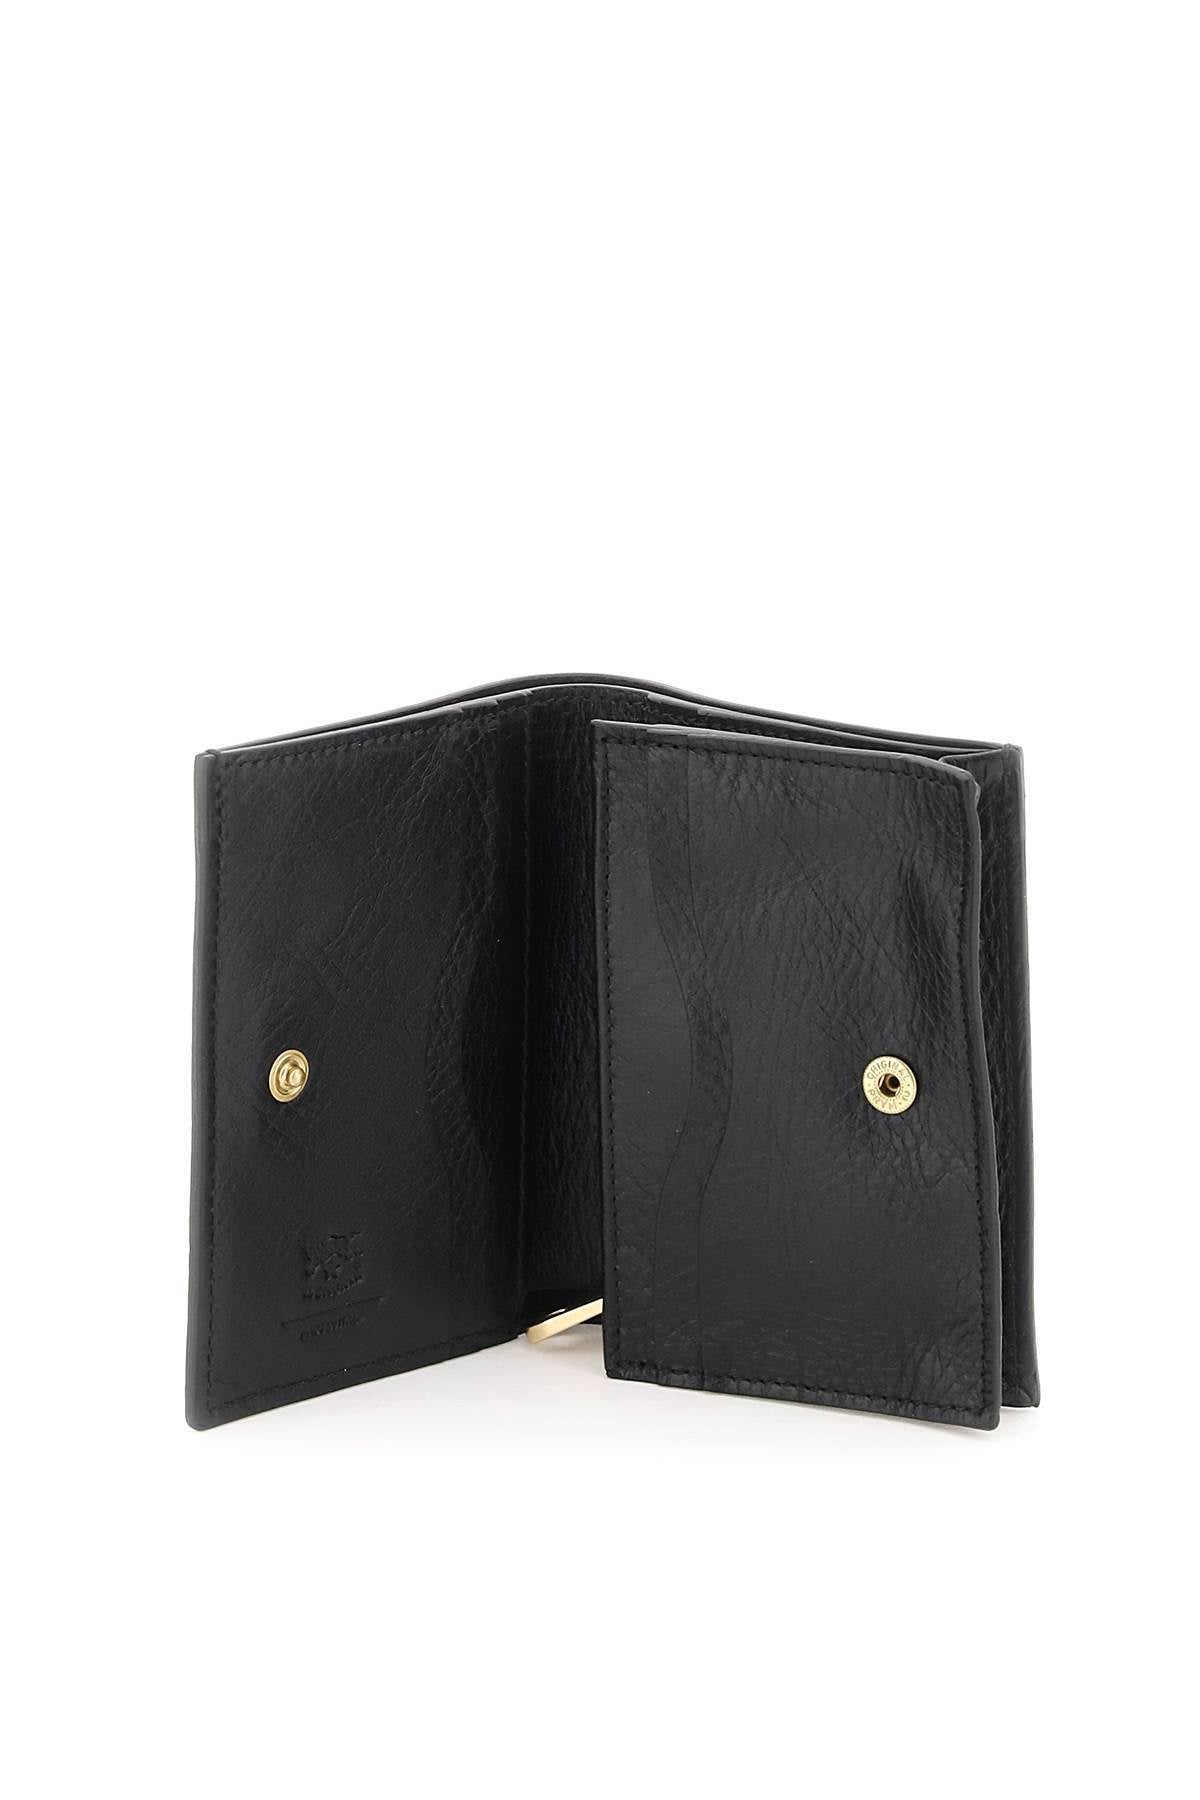 Il Bisonte Leather Wallet   Nero